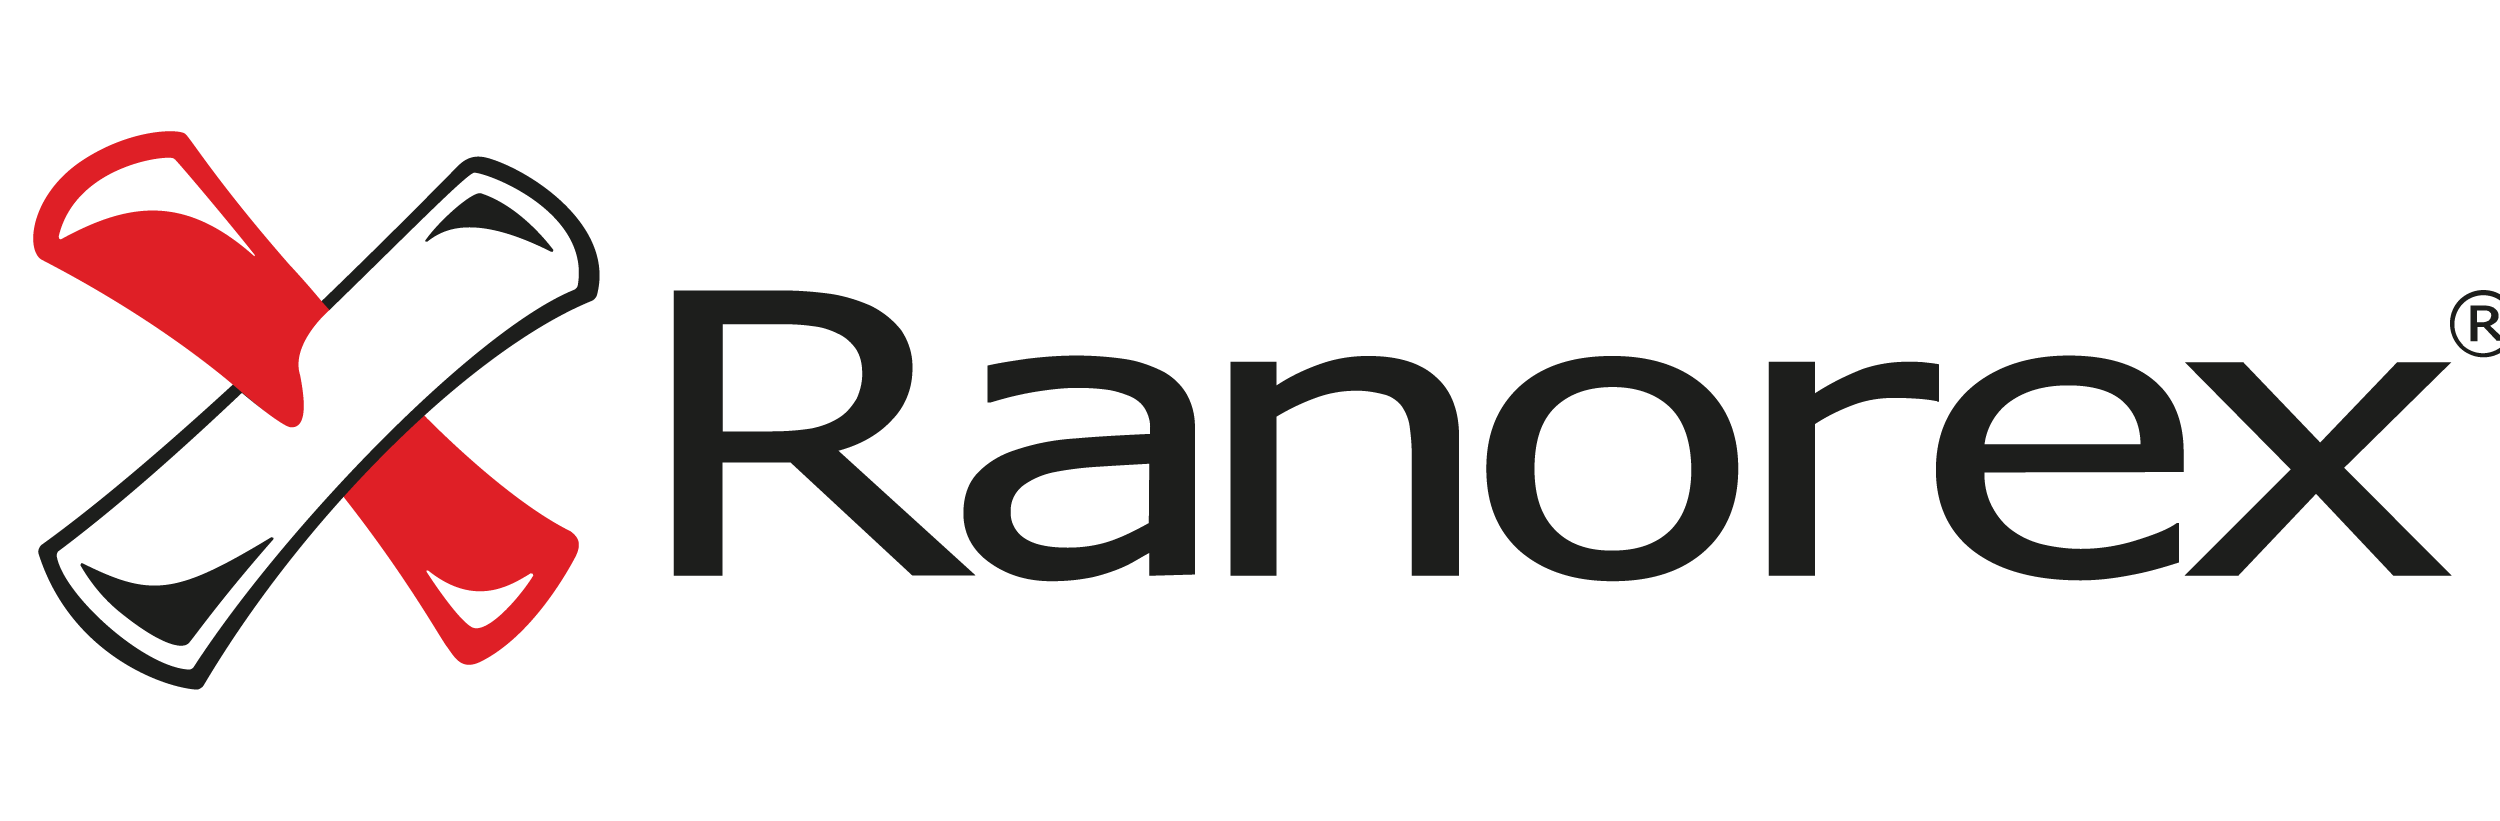 Ranorex 600px 02 Why US Organizations Need Kiuwan - Thank You